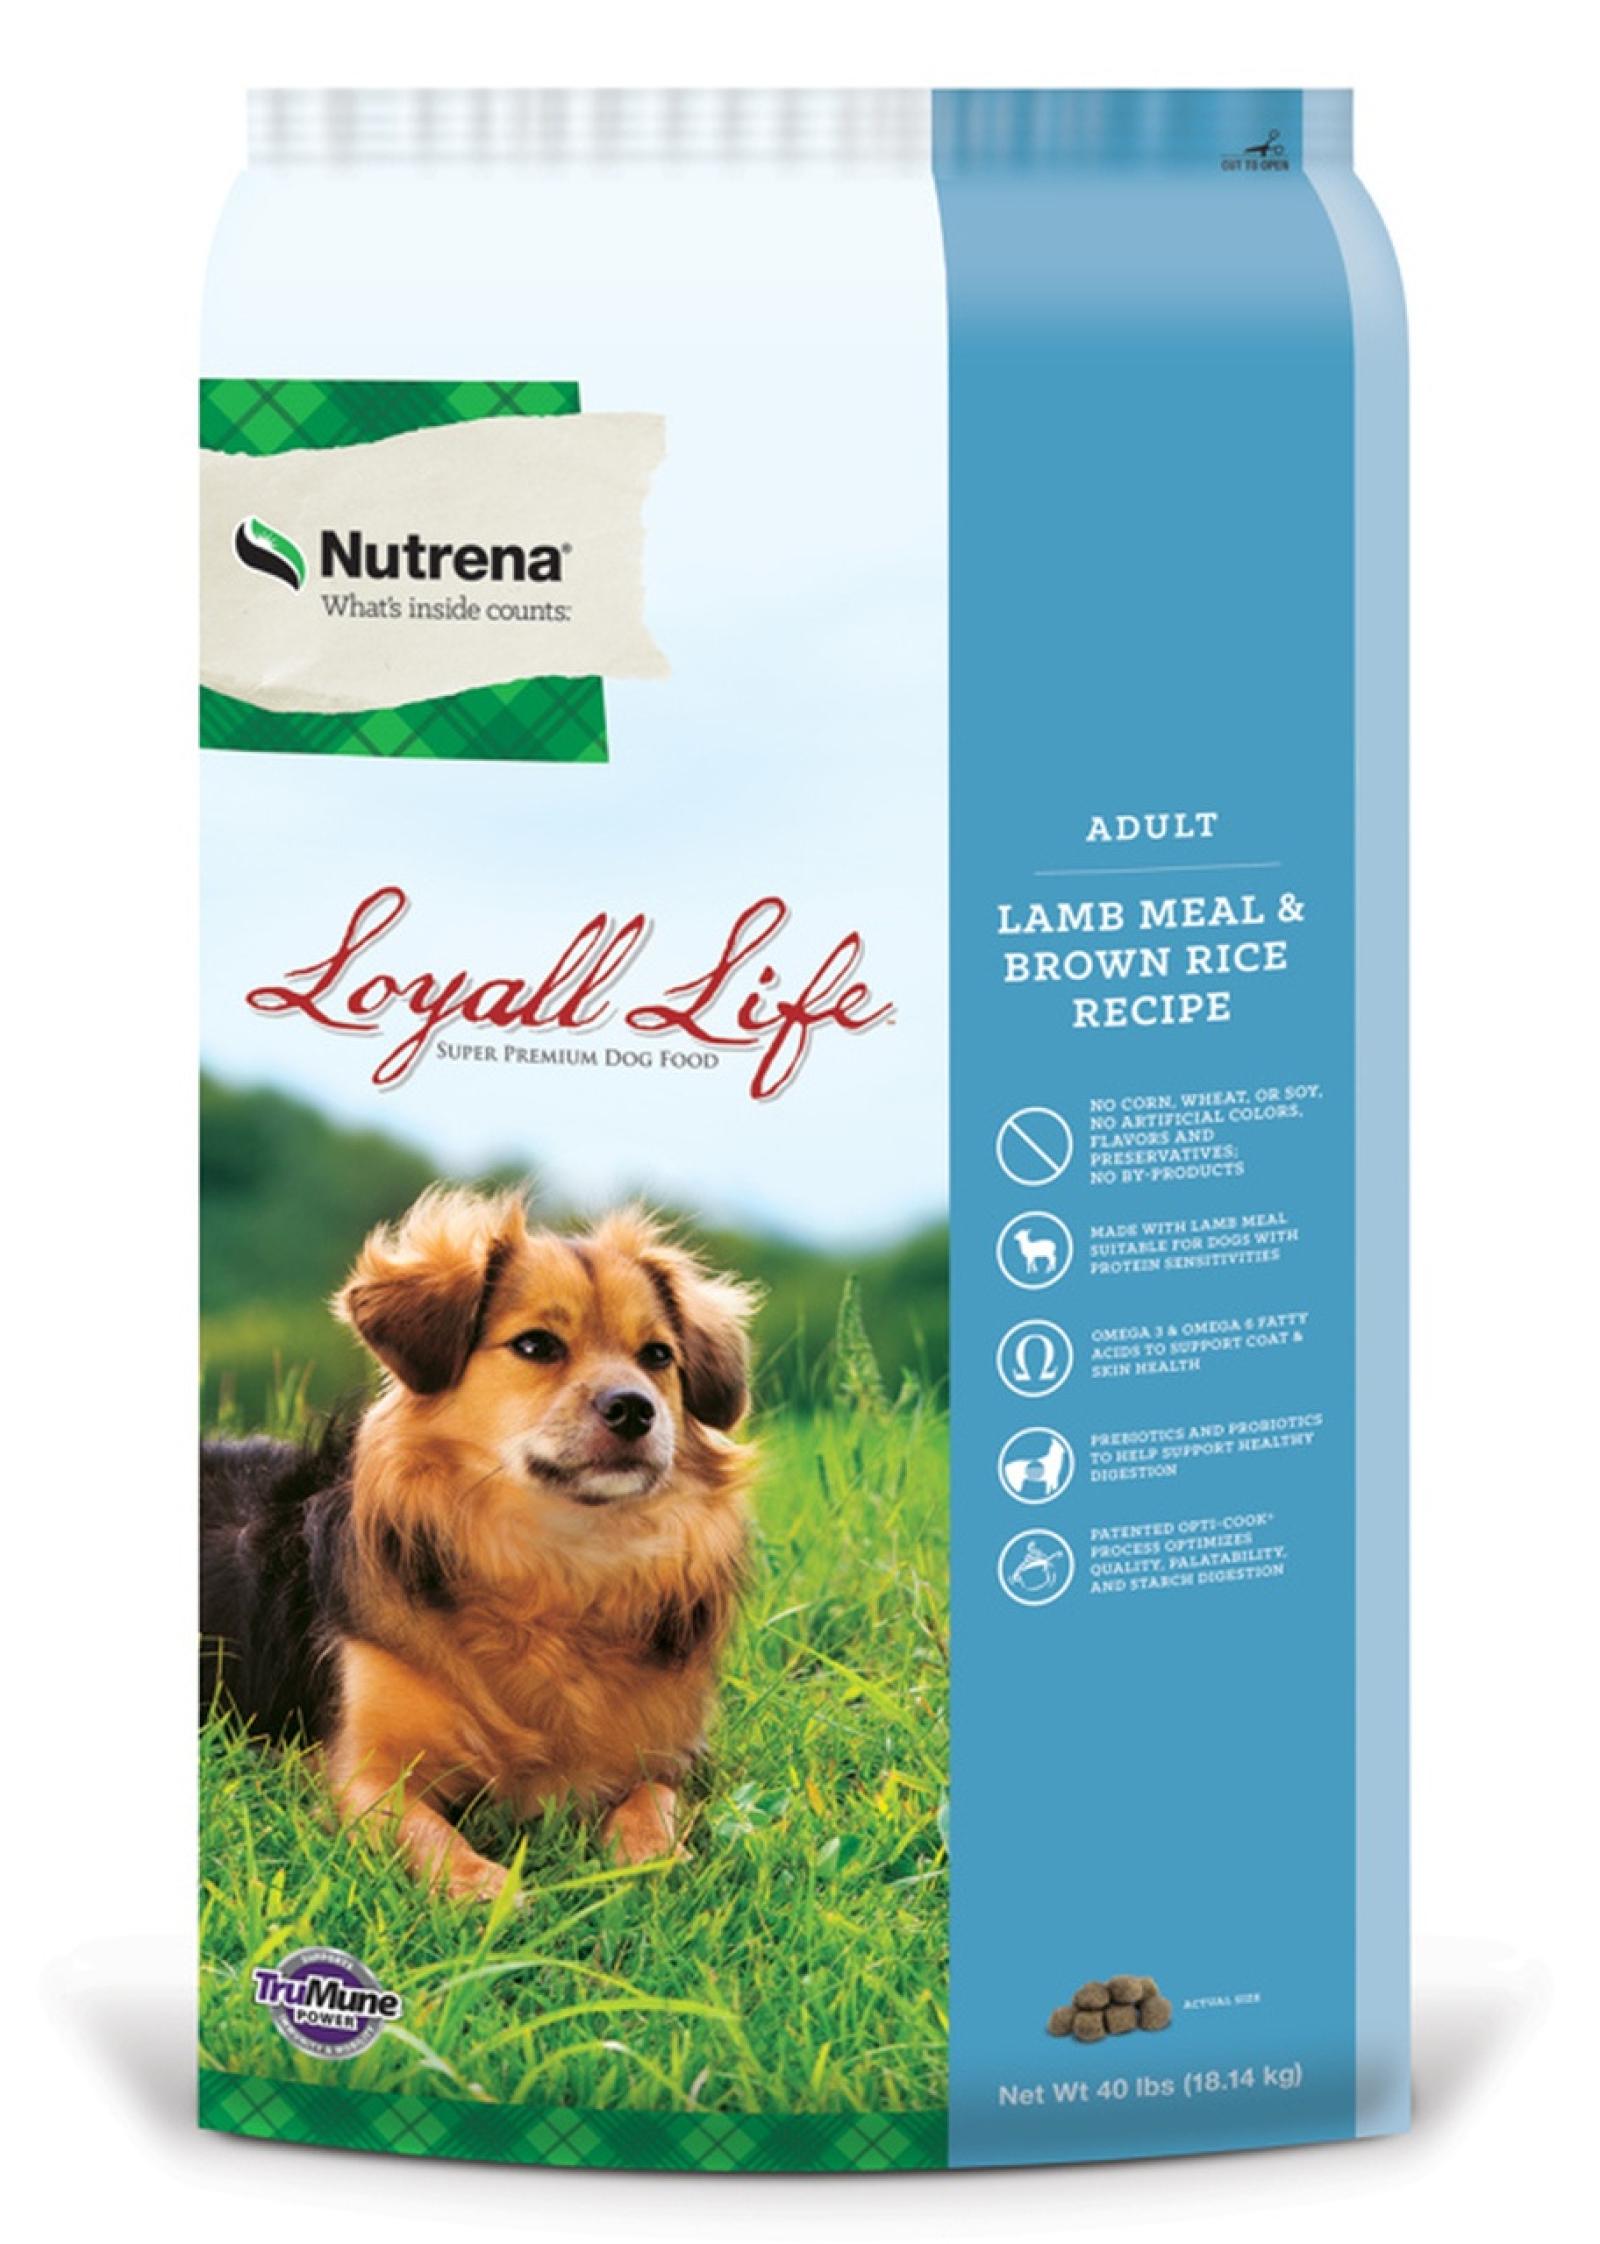 Nutrena Loyall Life Adult Lamb Meal & Rice Dog Food